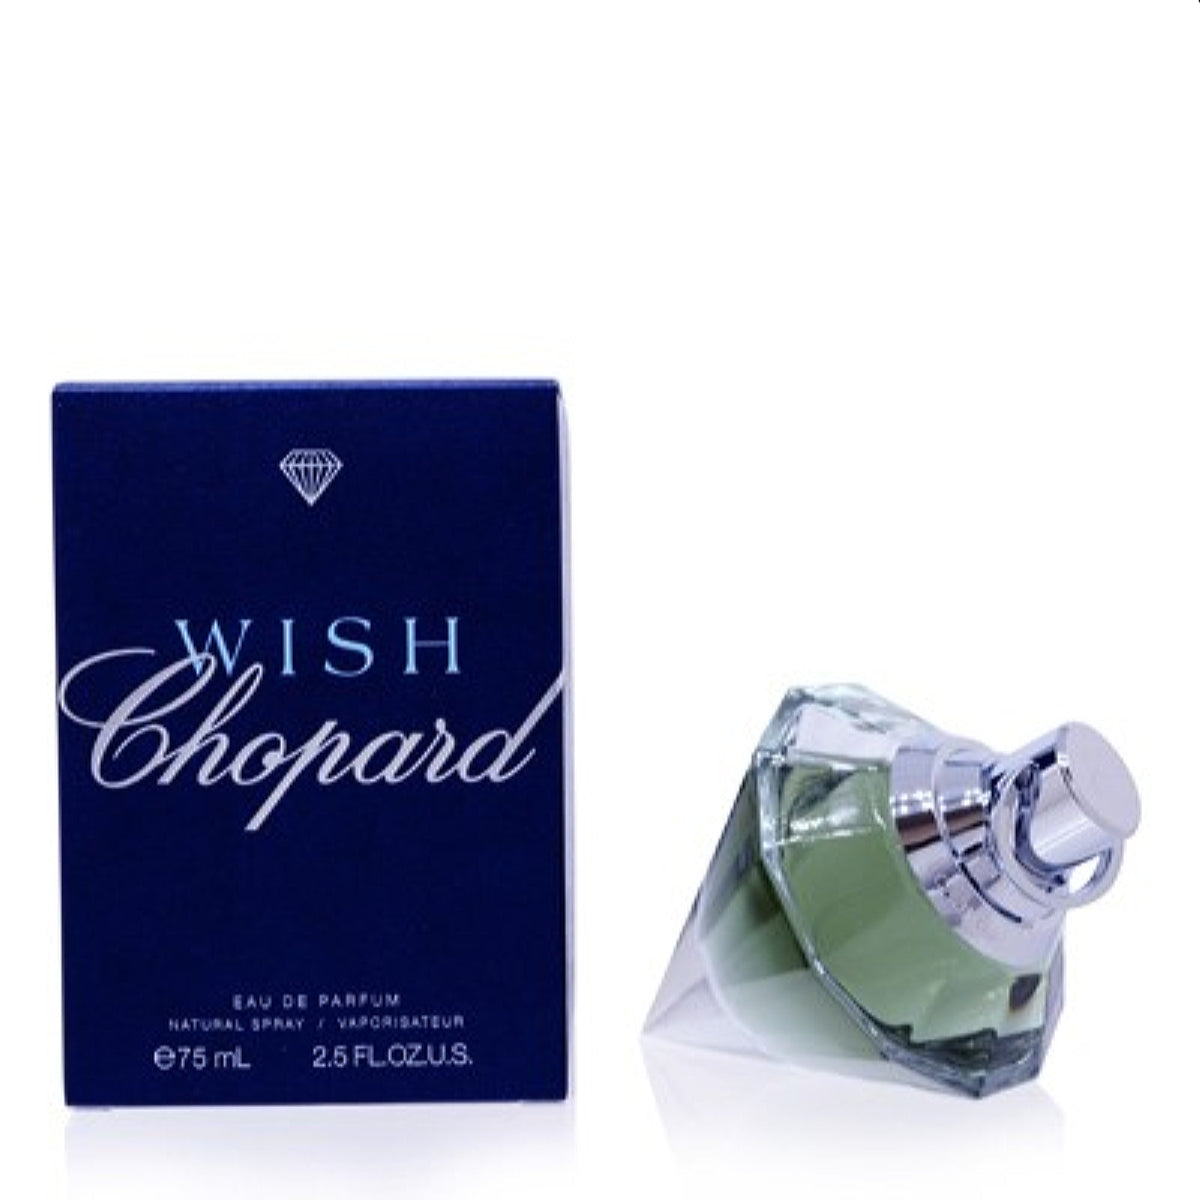 Wish Chopard Edp Spray 2.5 Oz (75 Ml) For Women  111718